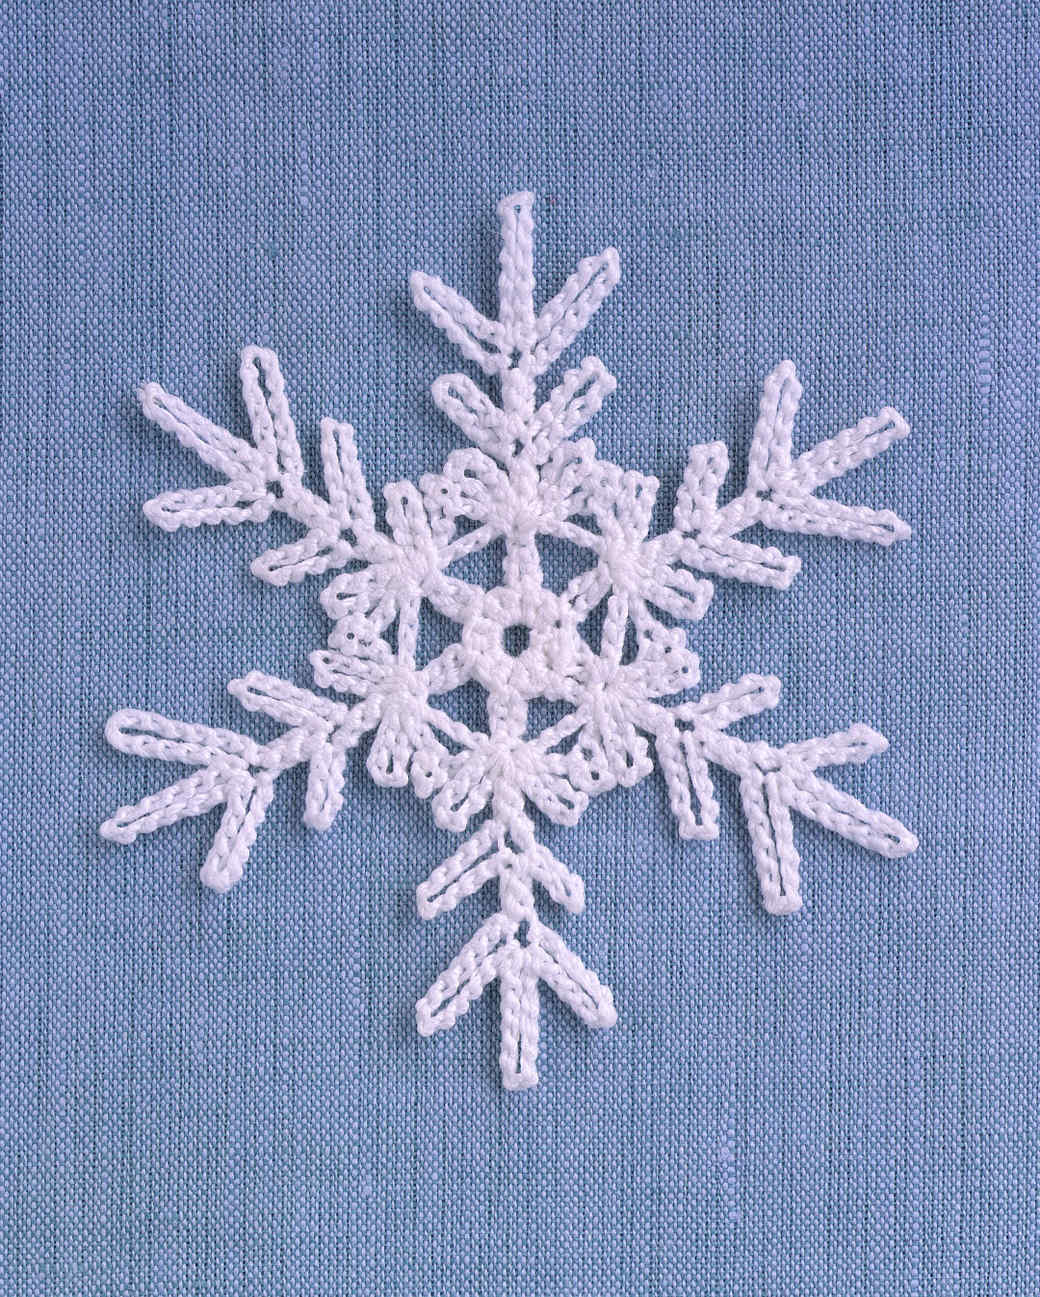 33 Crochet Snowflake Patterns Guide Patterns